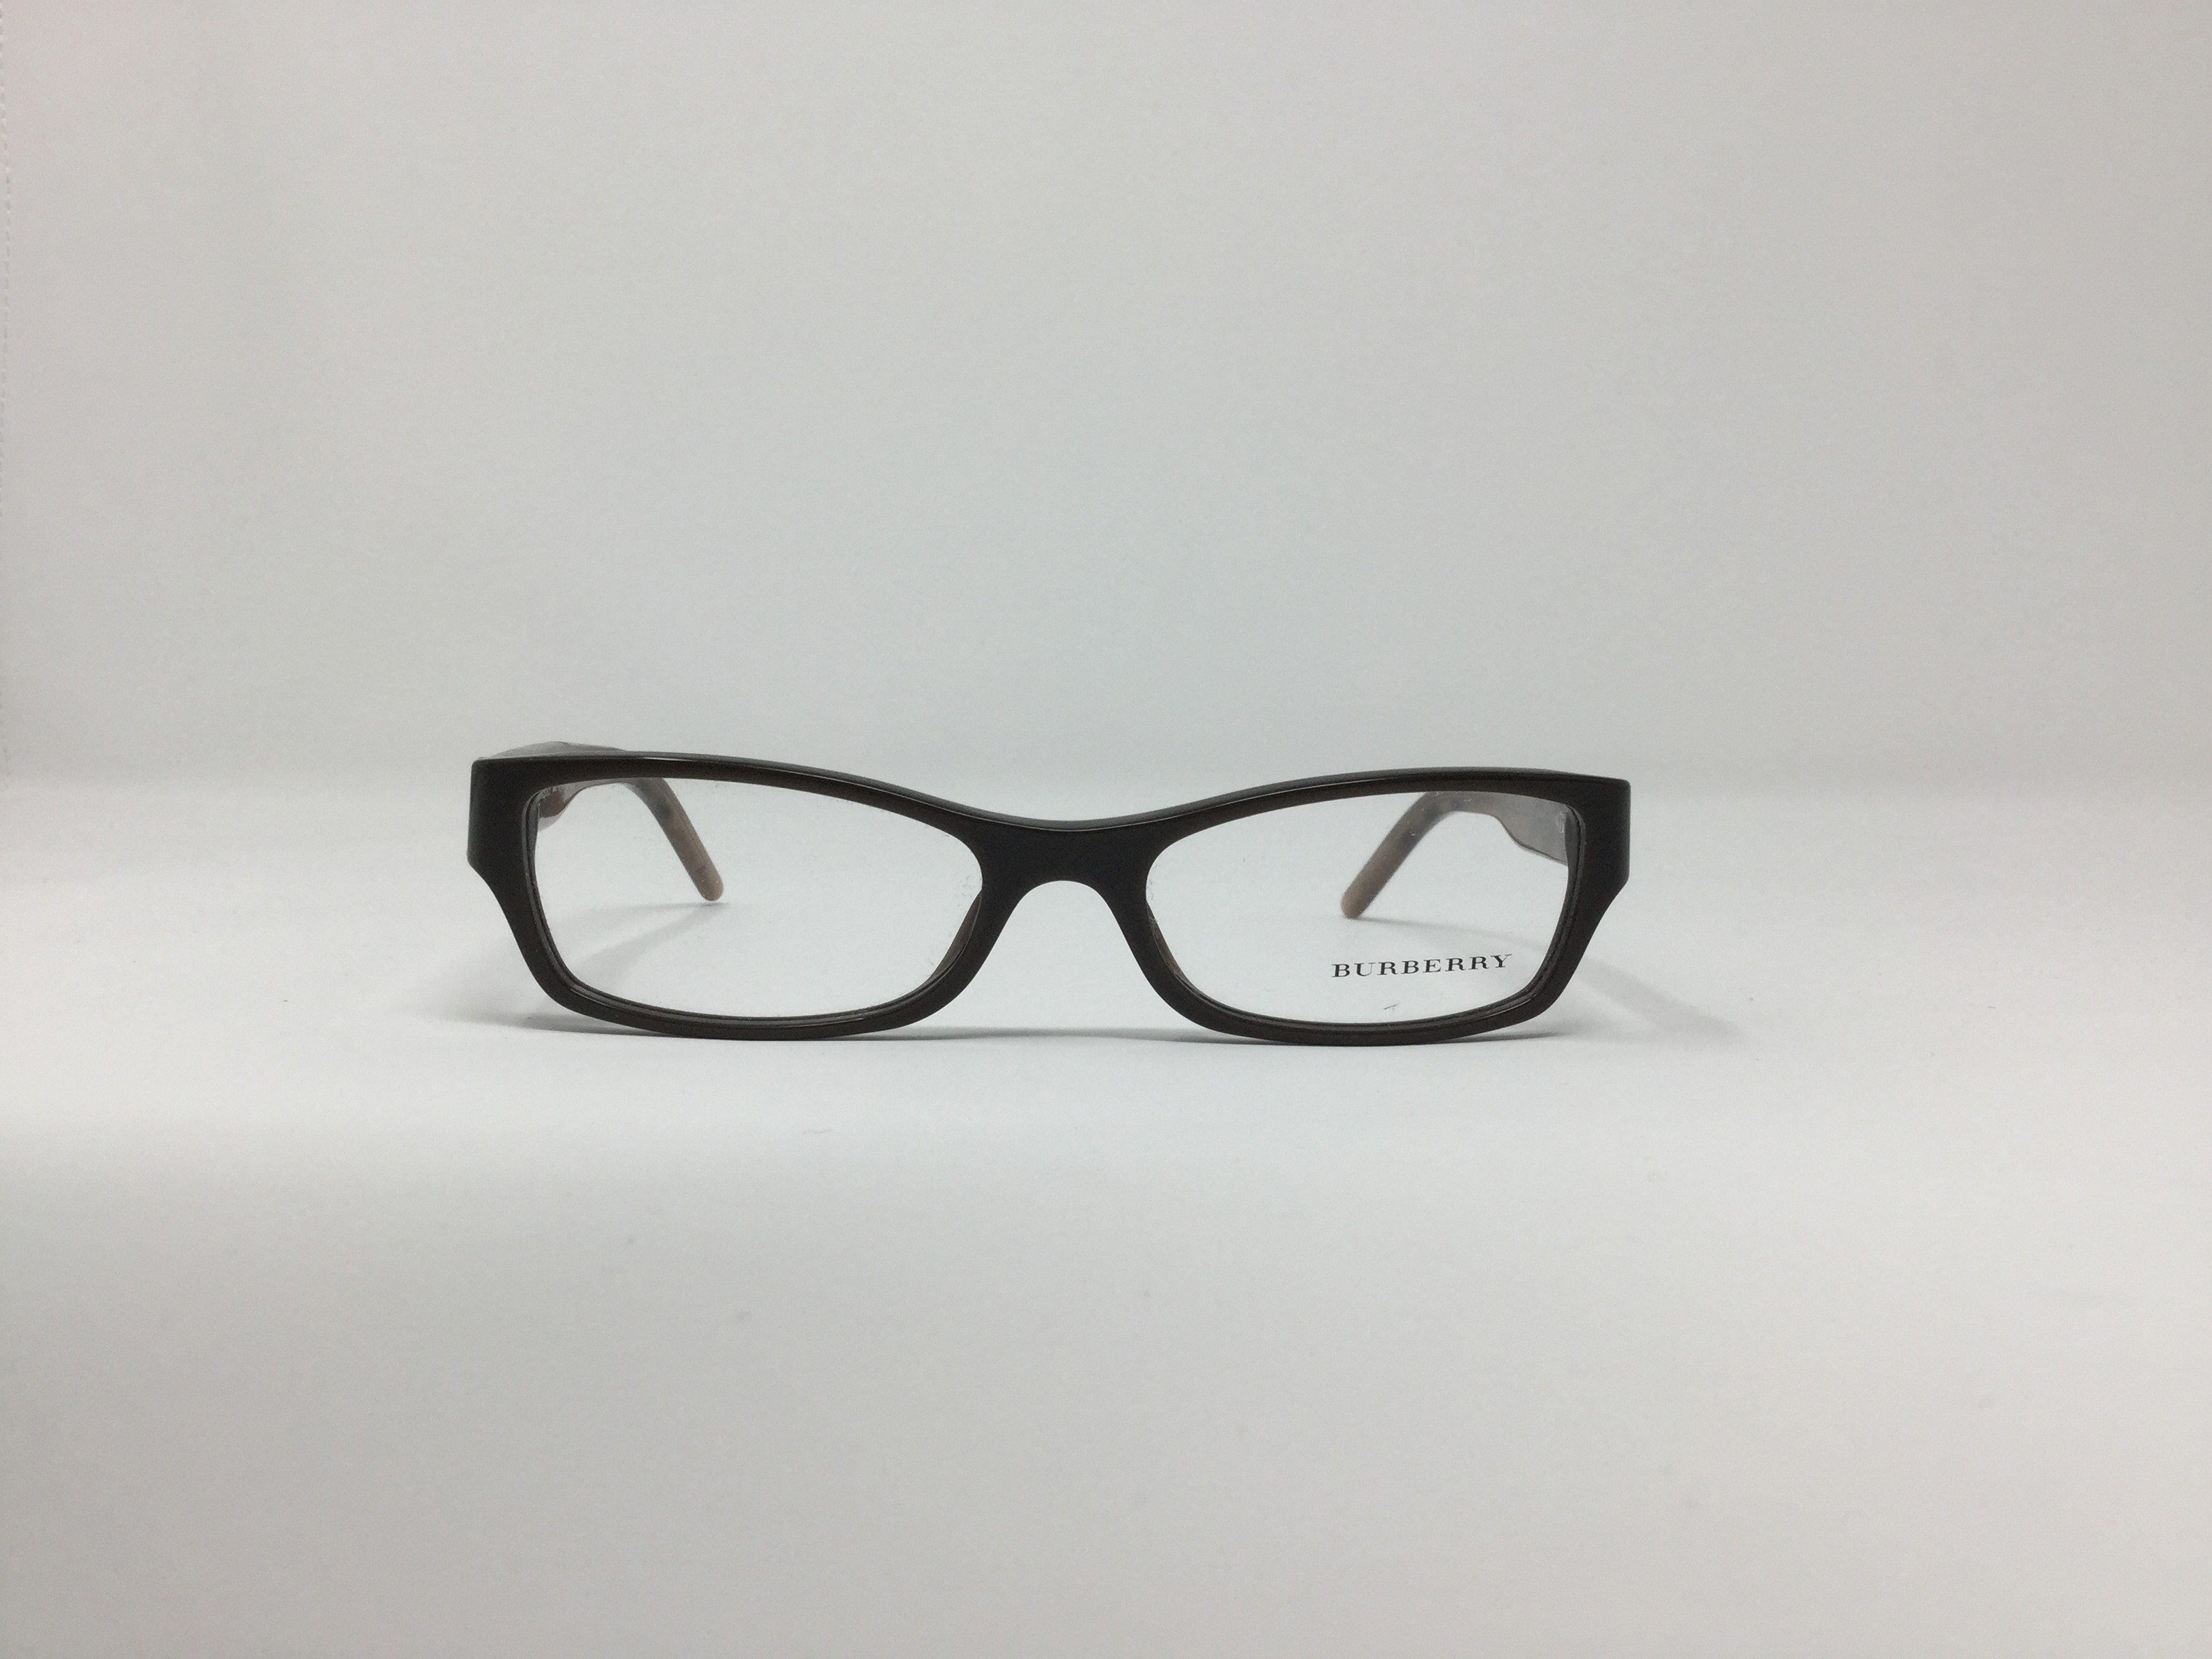 Burberry B2094 Unisex Eyeglasses